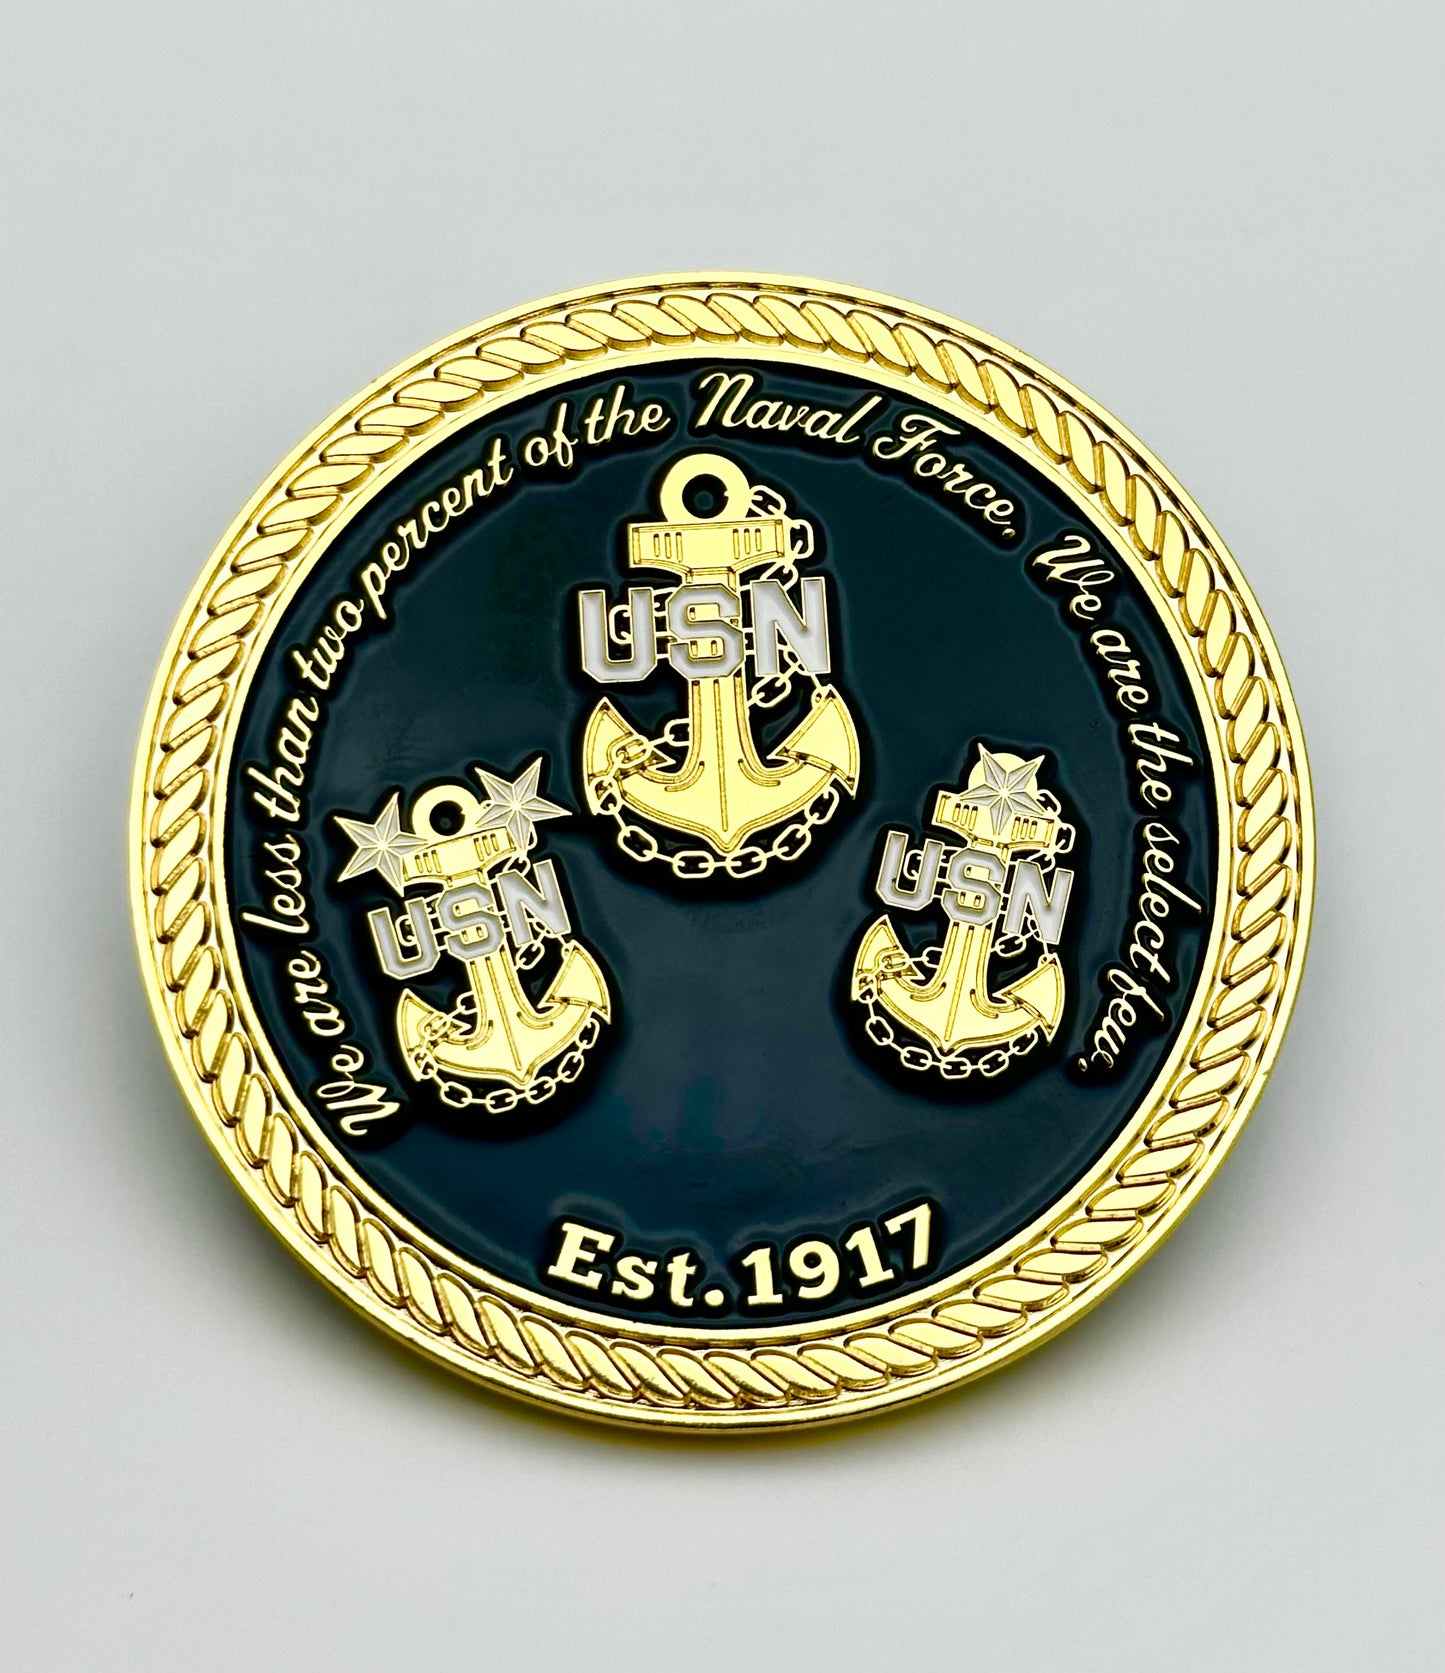 Navy Girl Challenge Coin